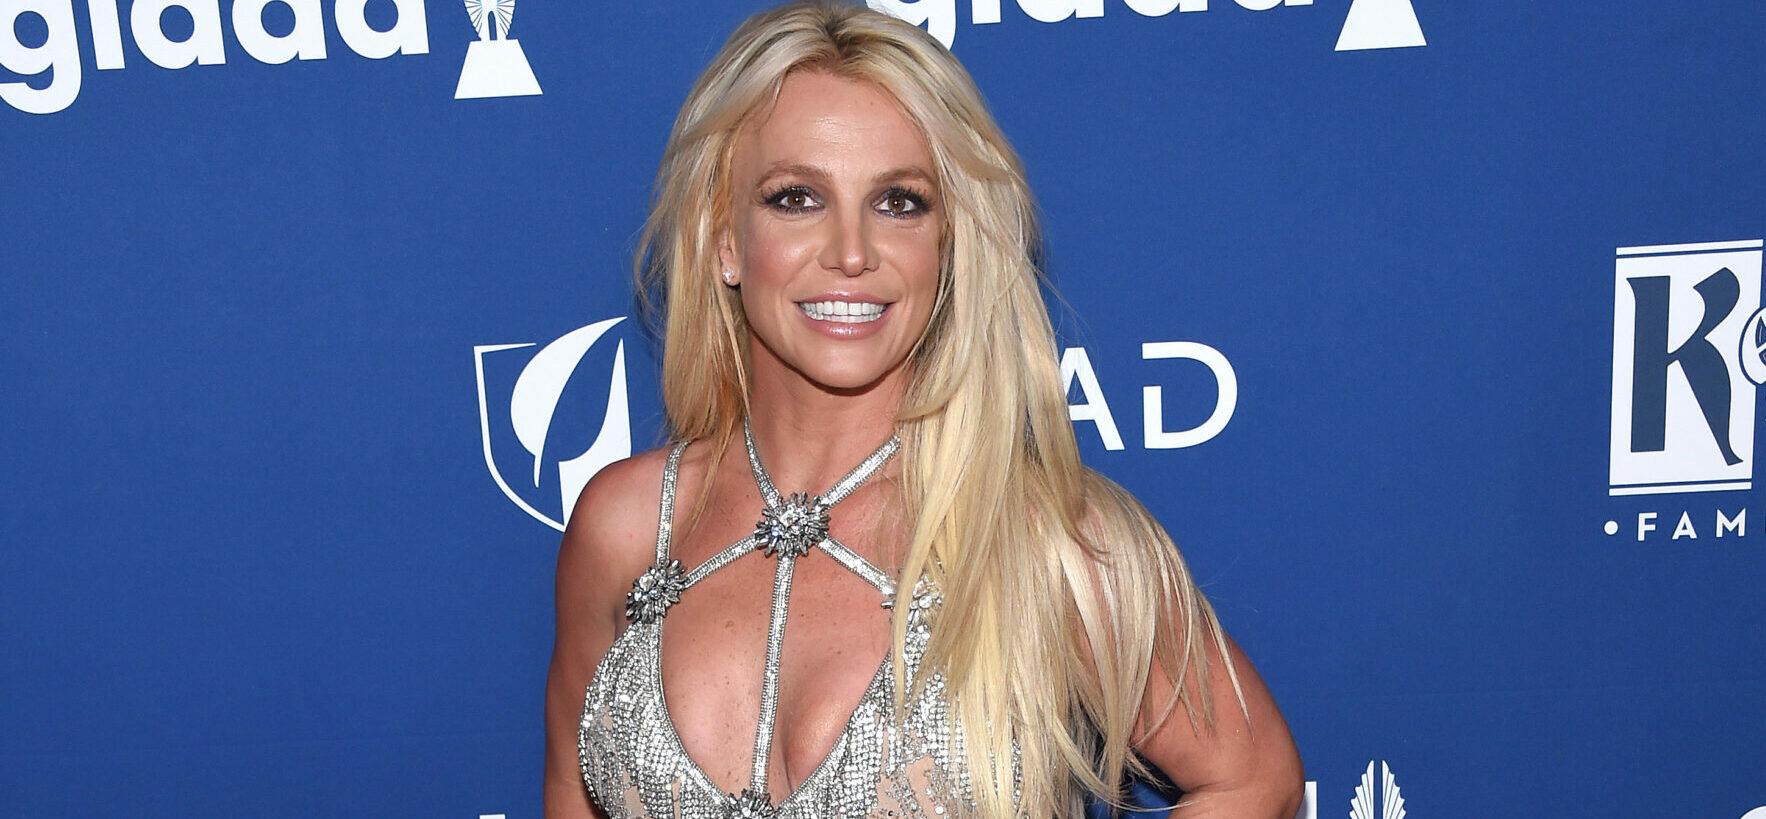 Britney Spears In Drawstring Bikini Reposts Dancing Video From April